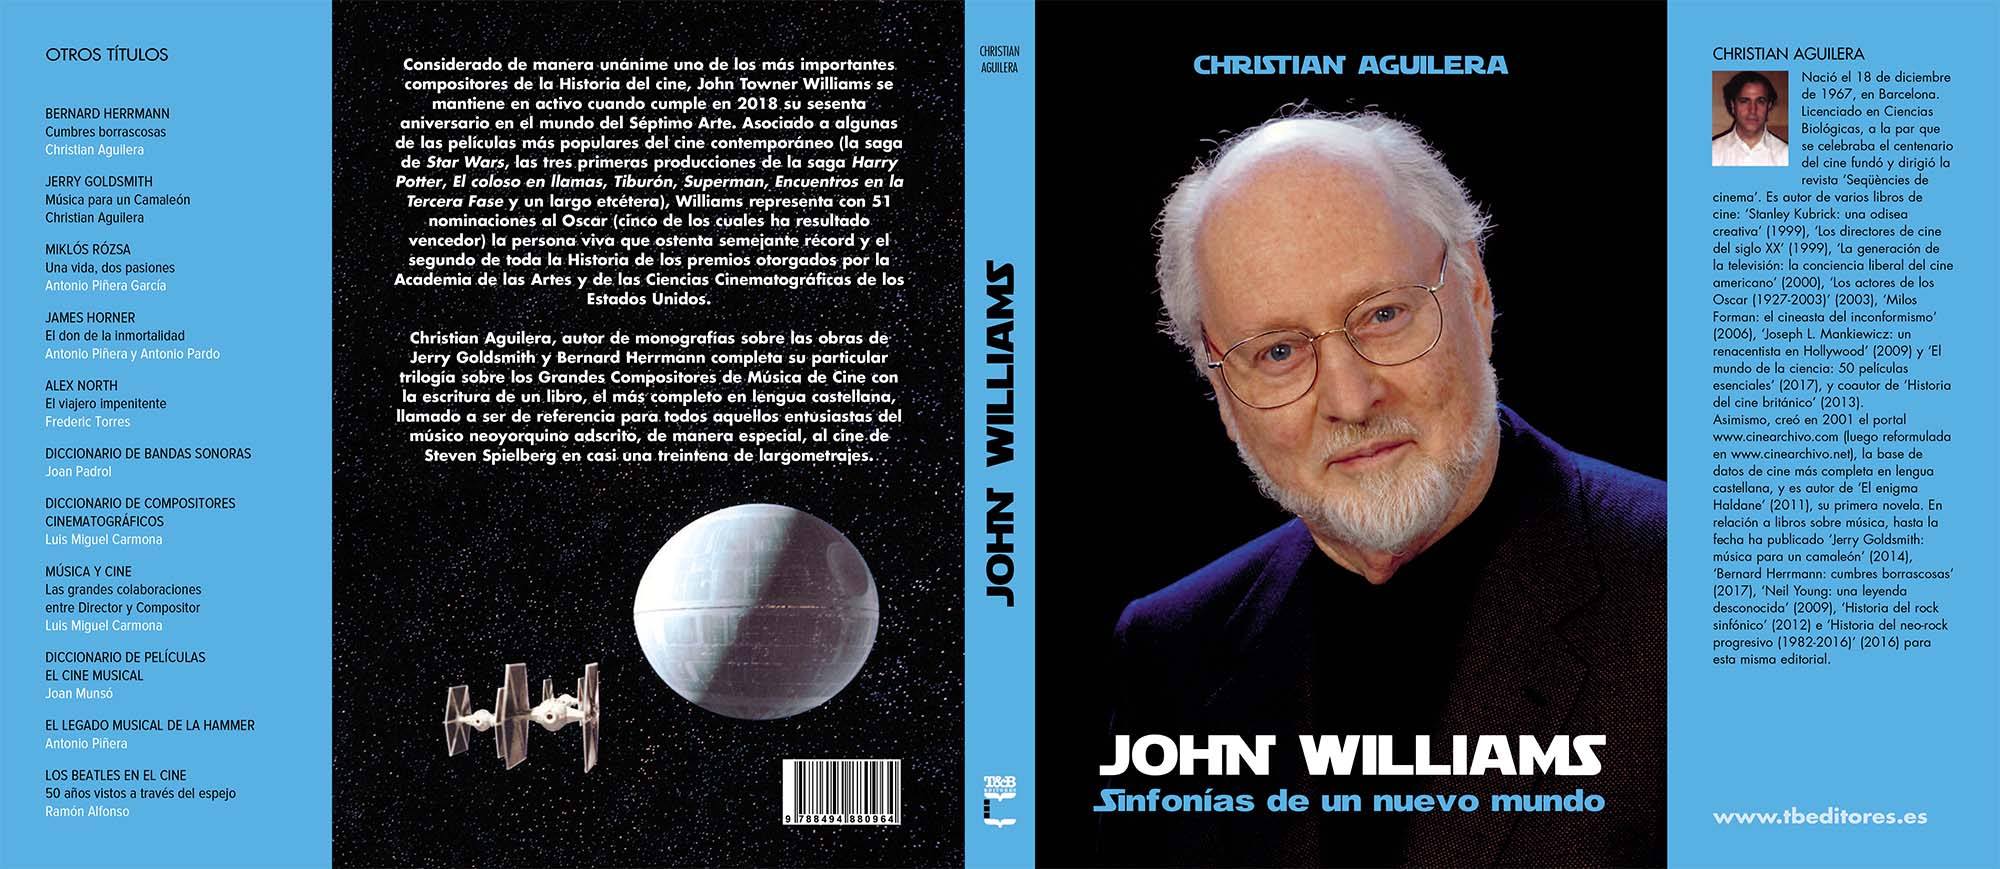 CHRISTIAN AGUILERA PUBLICA EL LIBRO 'JOHN WILLIAMS: SINFONAS DE UN NUEVO MUNDO'